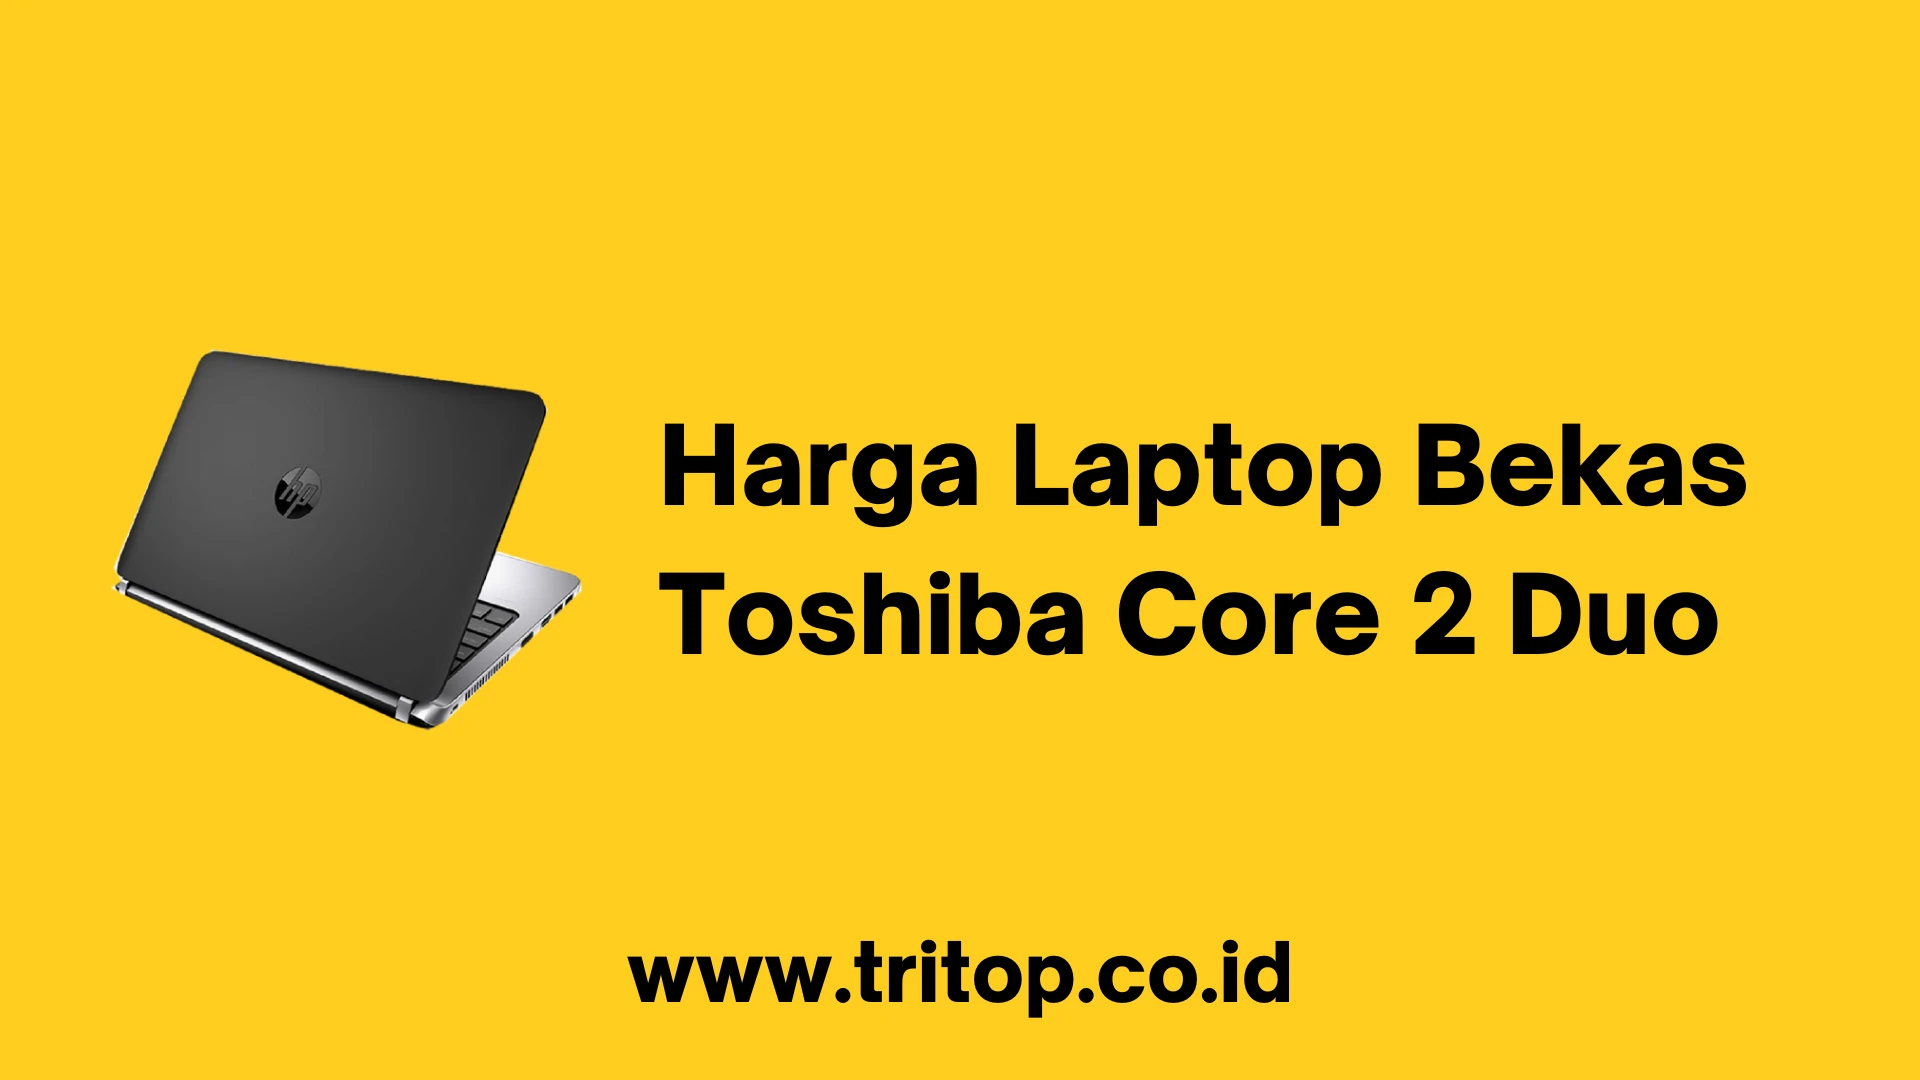 Harga Laptop Bekas Toshiba Core 2 Duo